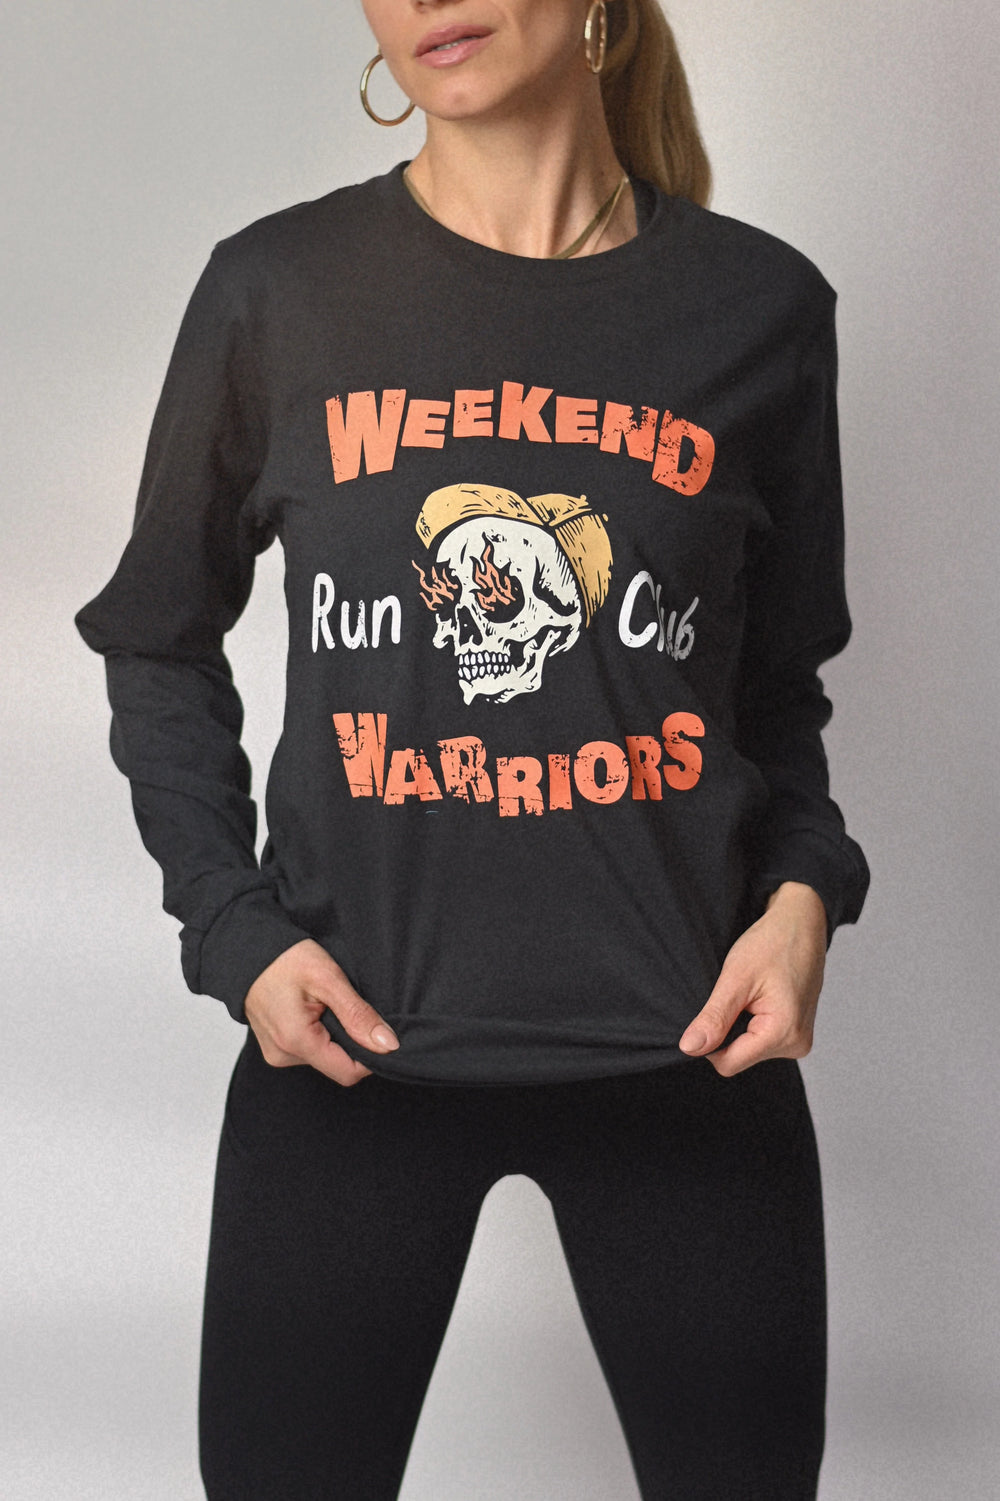 Weekend Warriors Run Club Women's Sweatshirt XL / Vintage Black